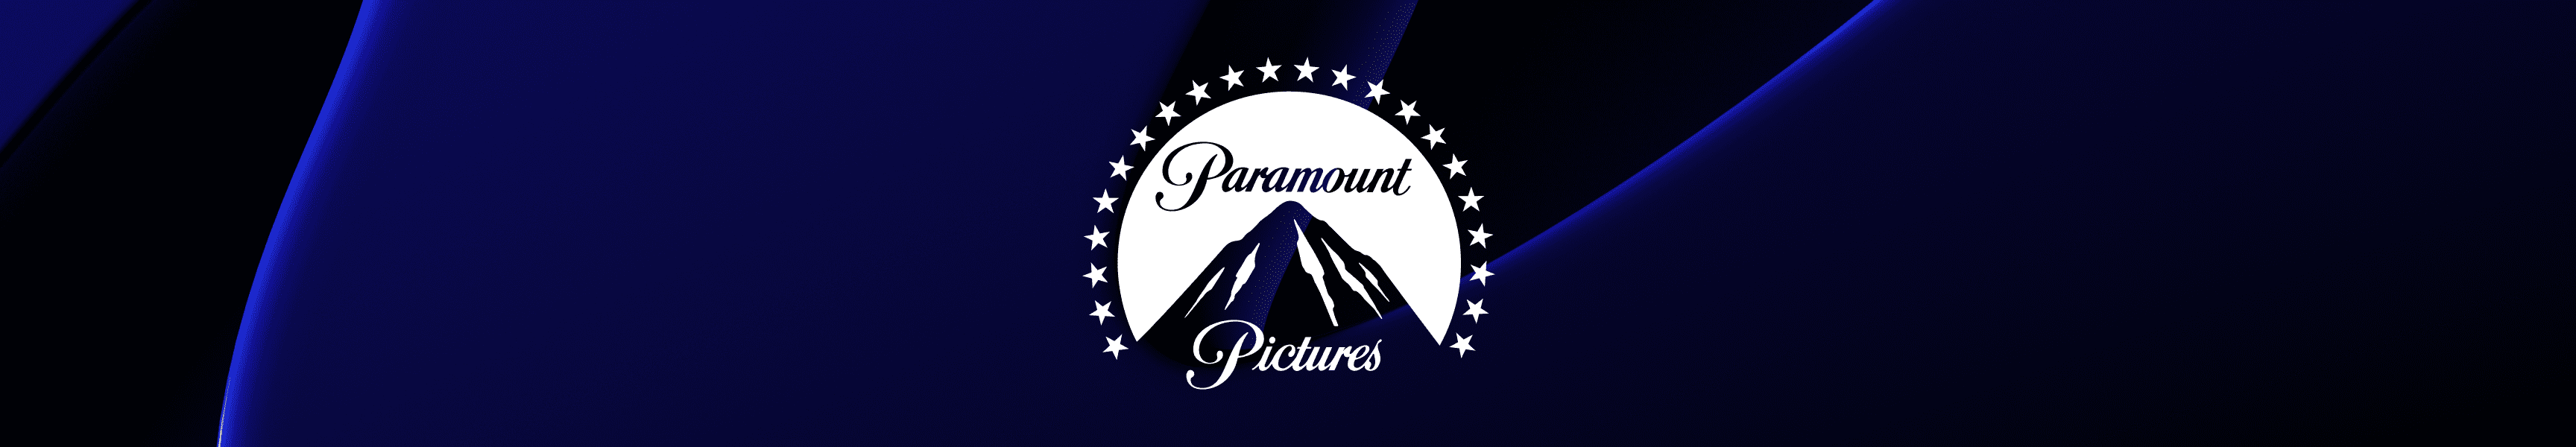 Paramount Pictures Untersetzer